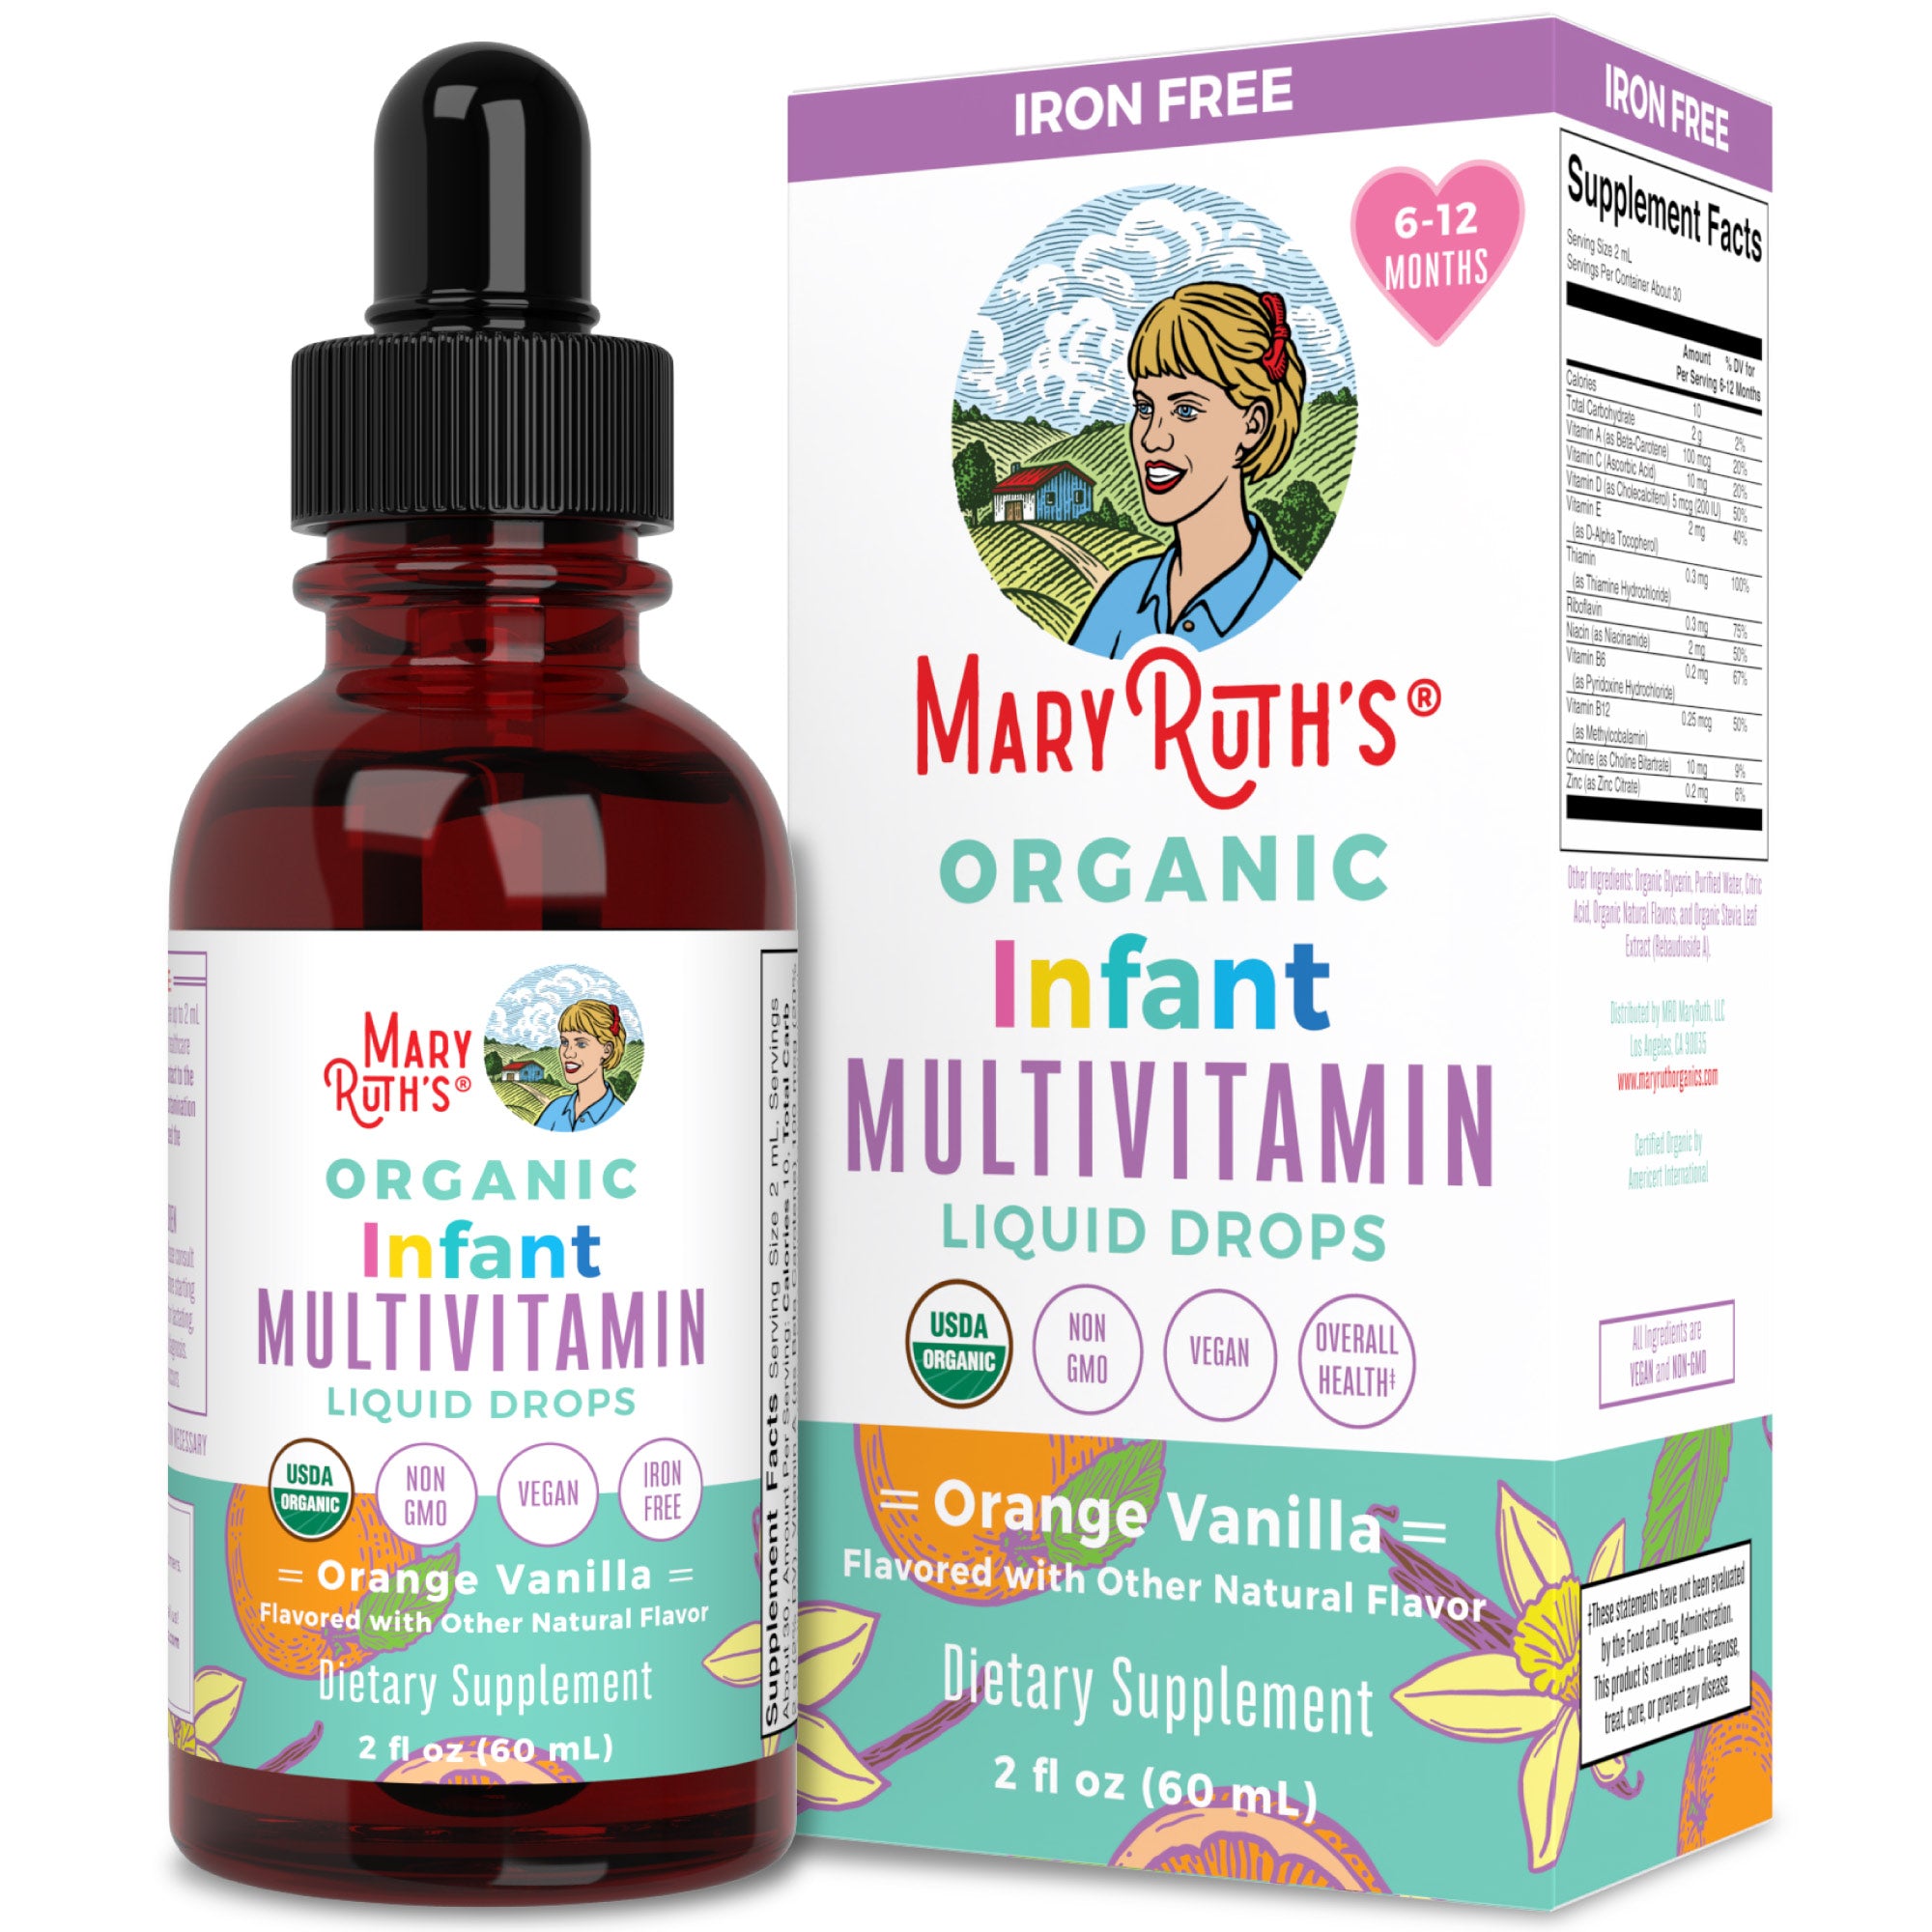 Organic Infant Multivitamin Liquid Drops